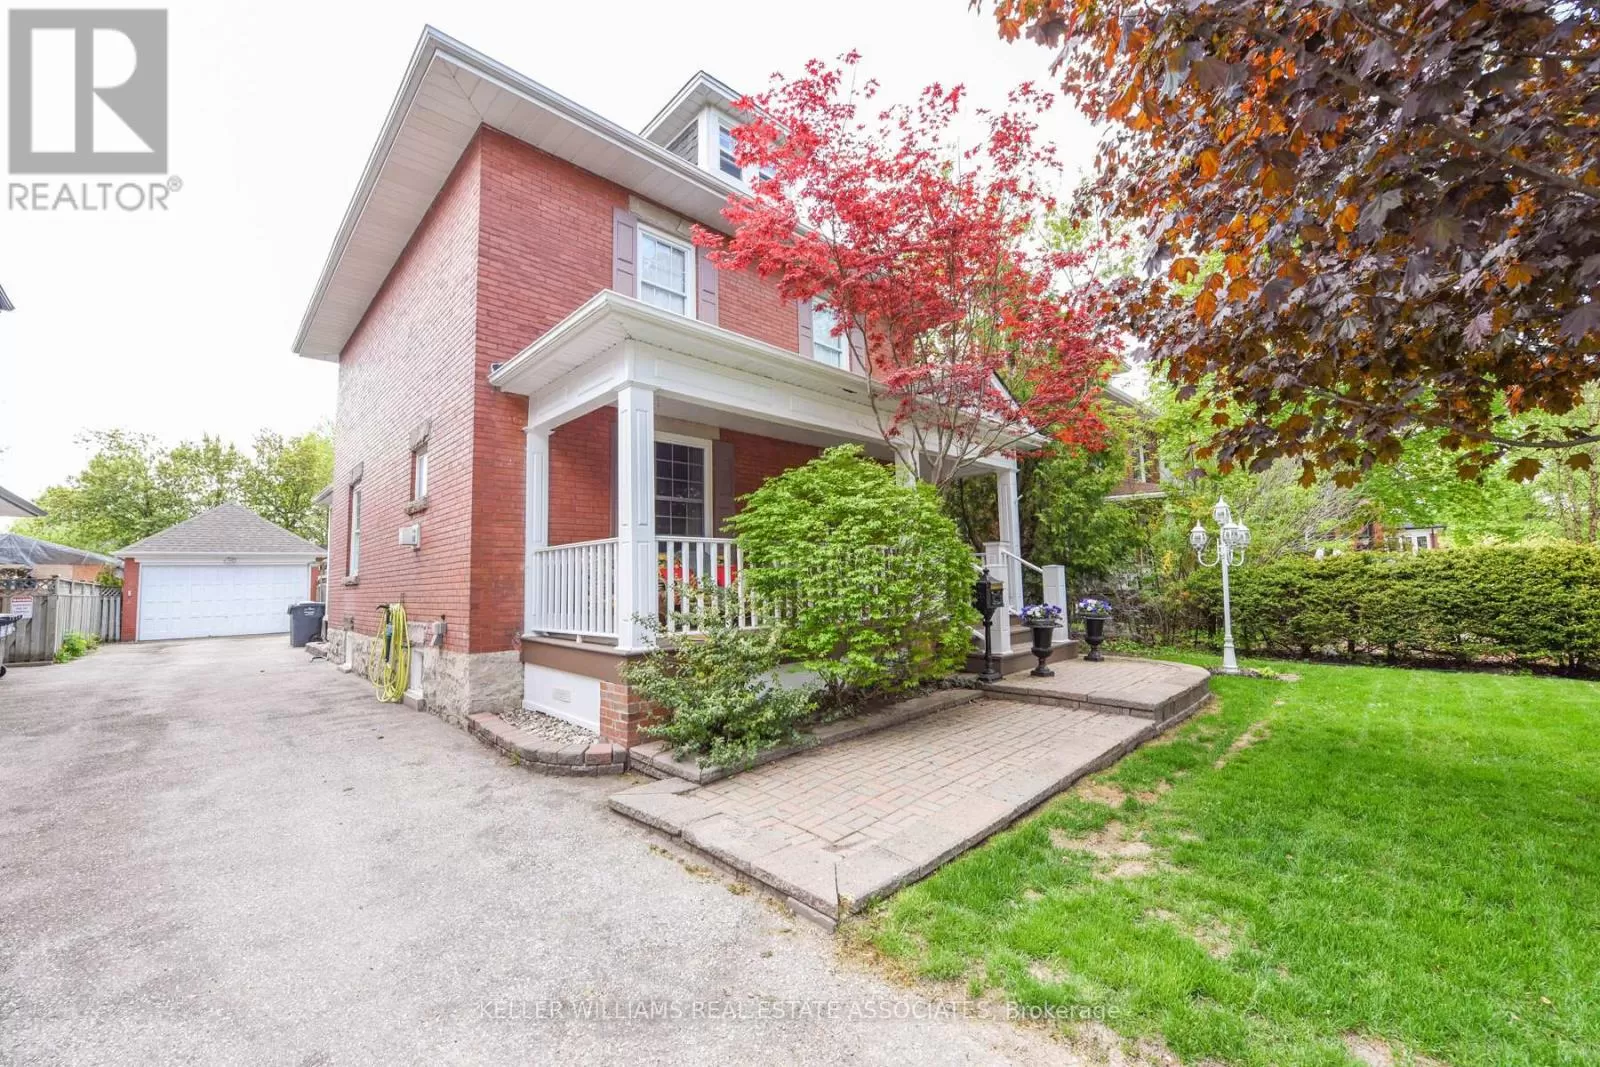 House for rent: 57 Elizabeth St S, Brampton, Ontario L6Y 1R2